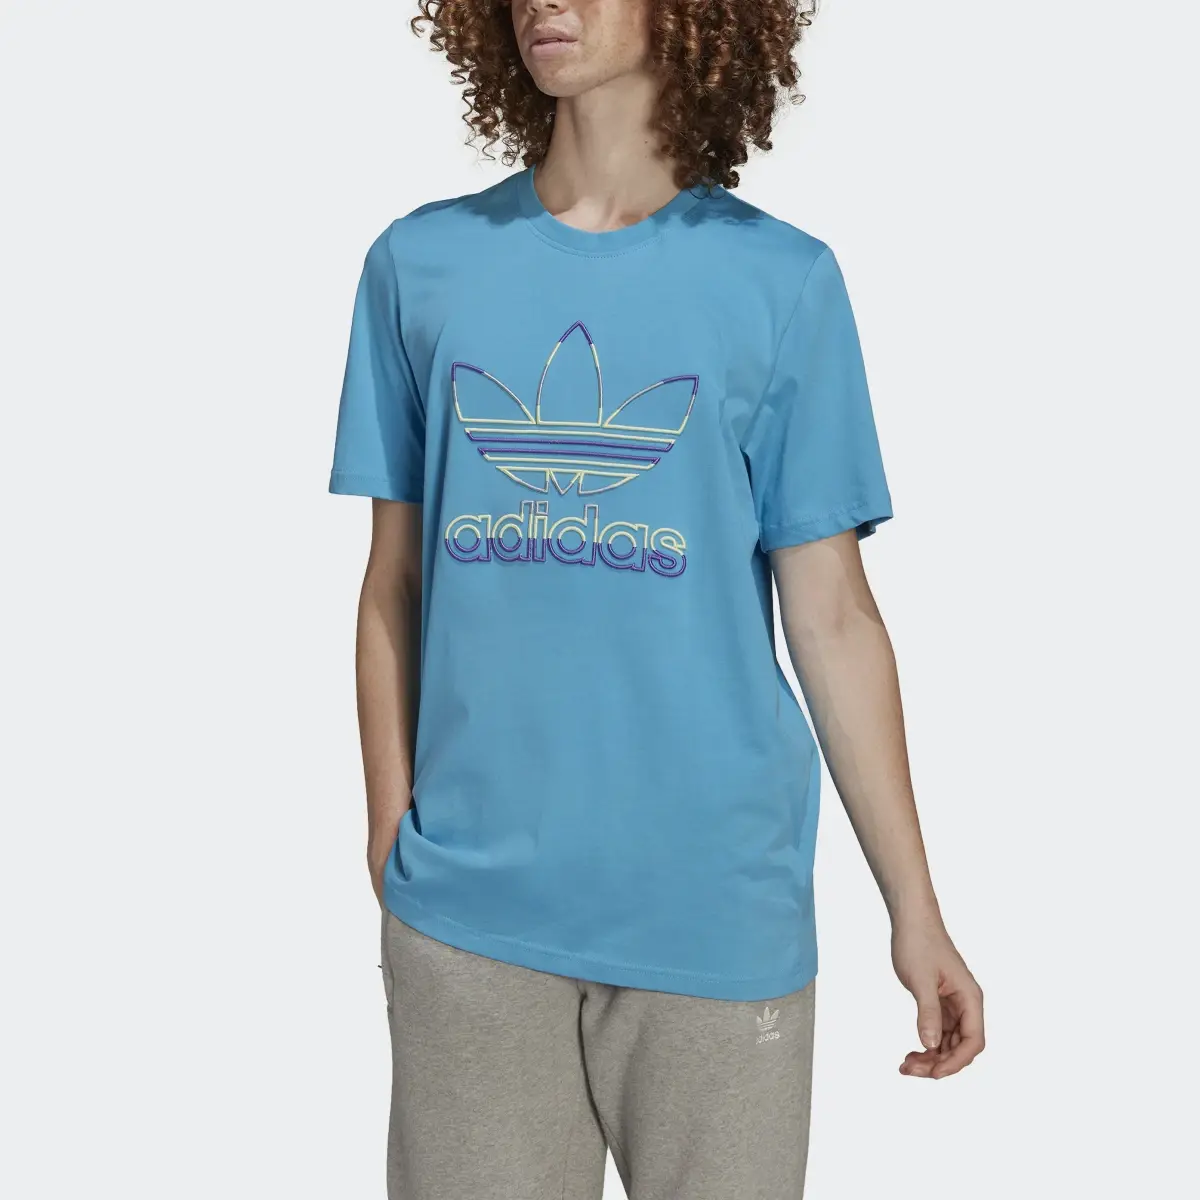 Adidas Trefoil T-Shirt. 1